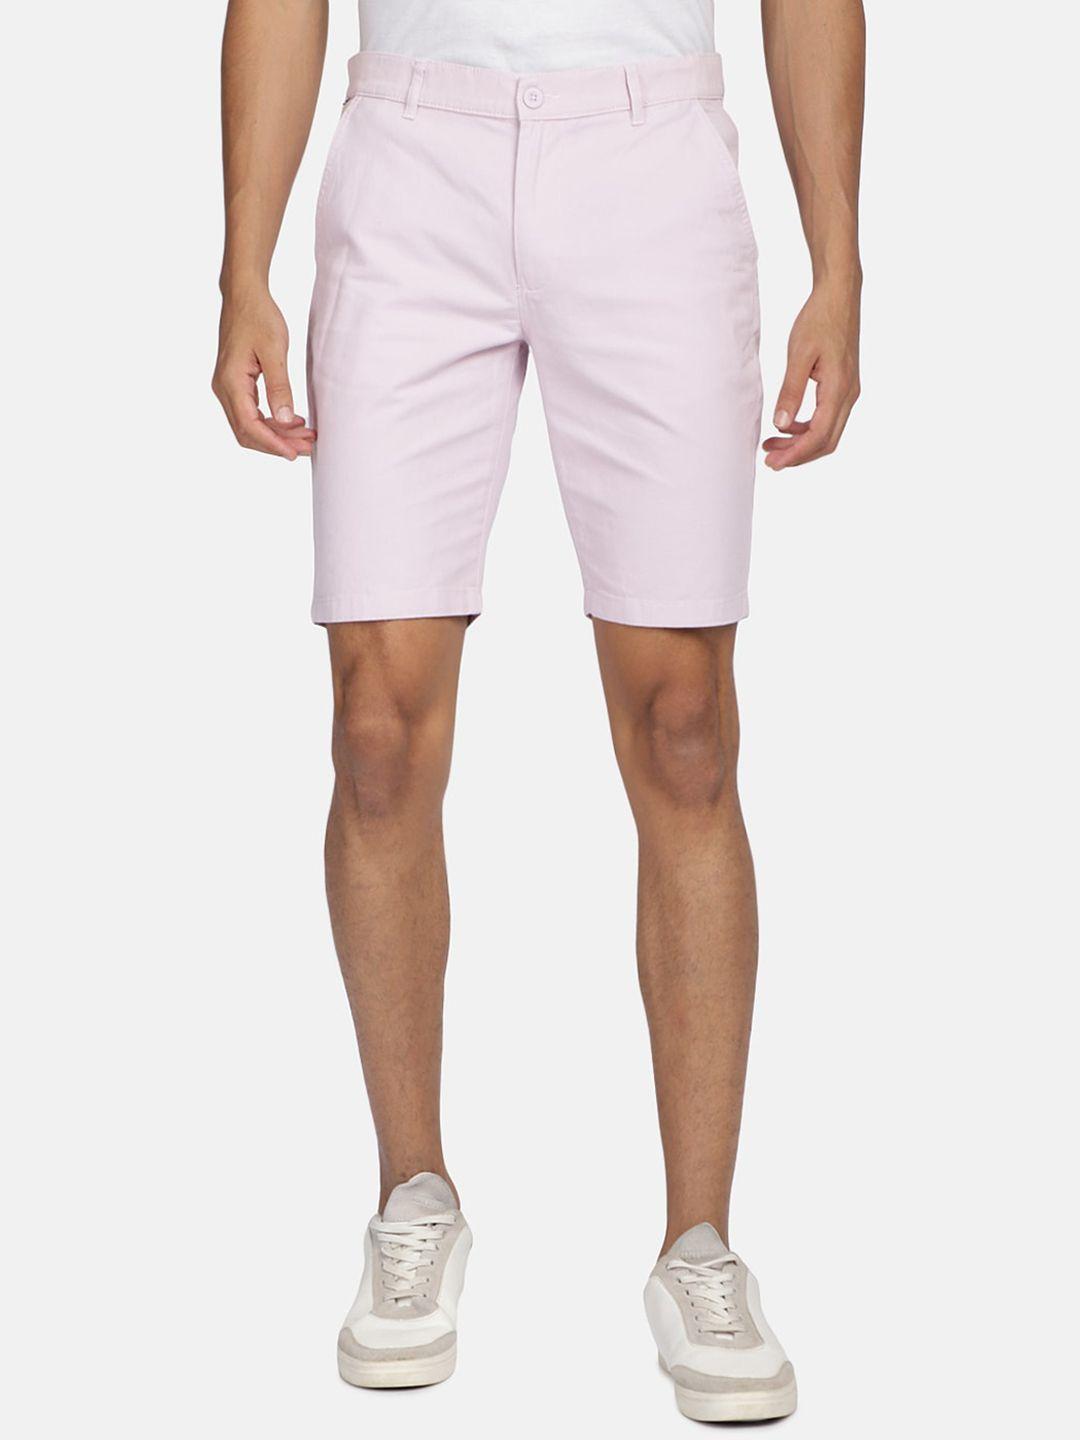 hardsoda-men-mid-rise-slim-fit-cotton-shorts